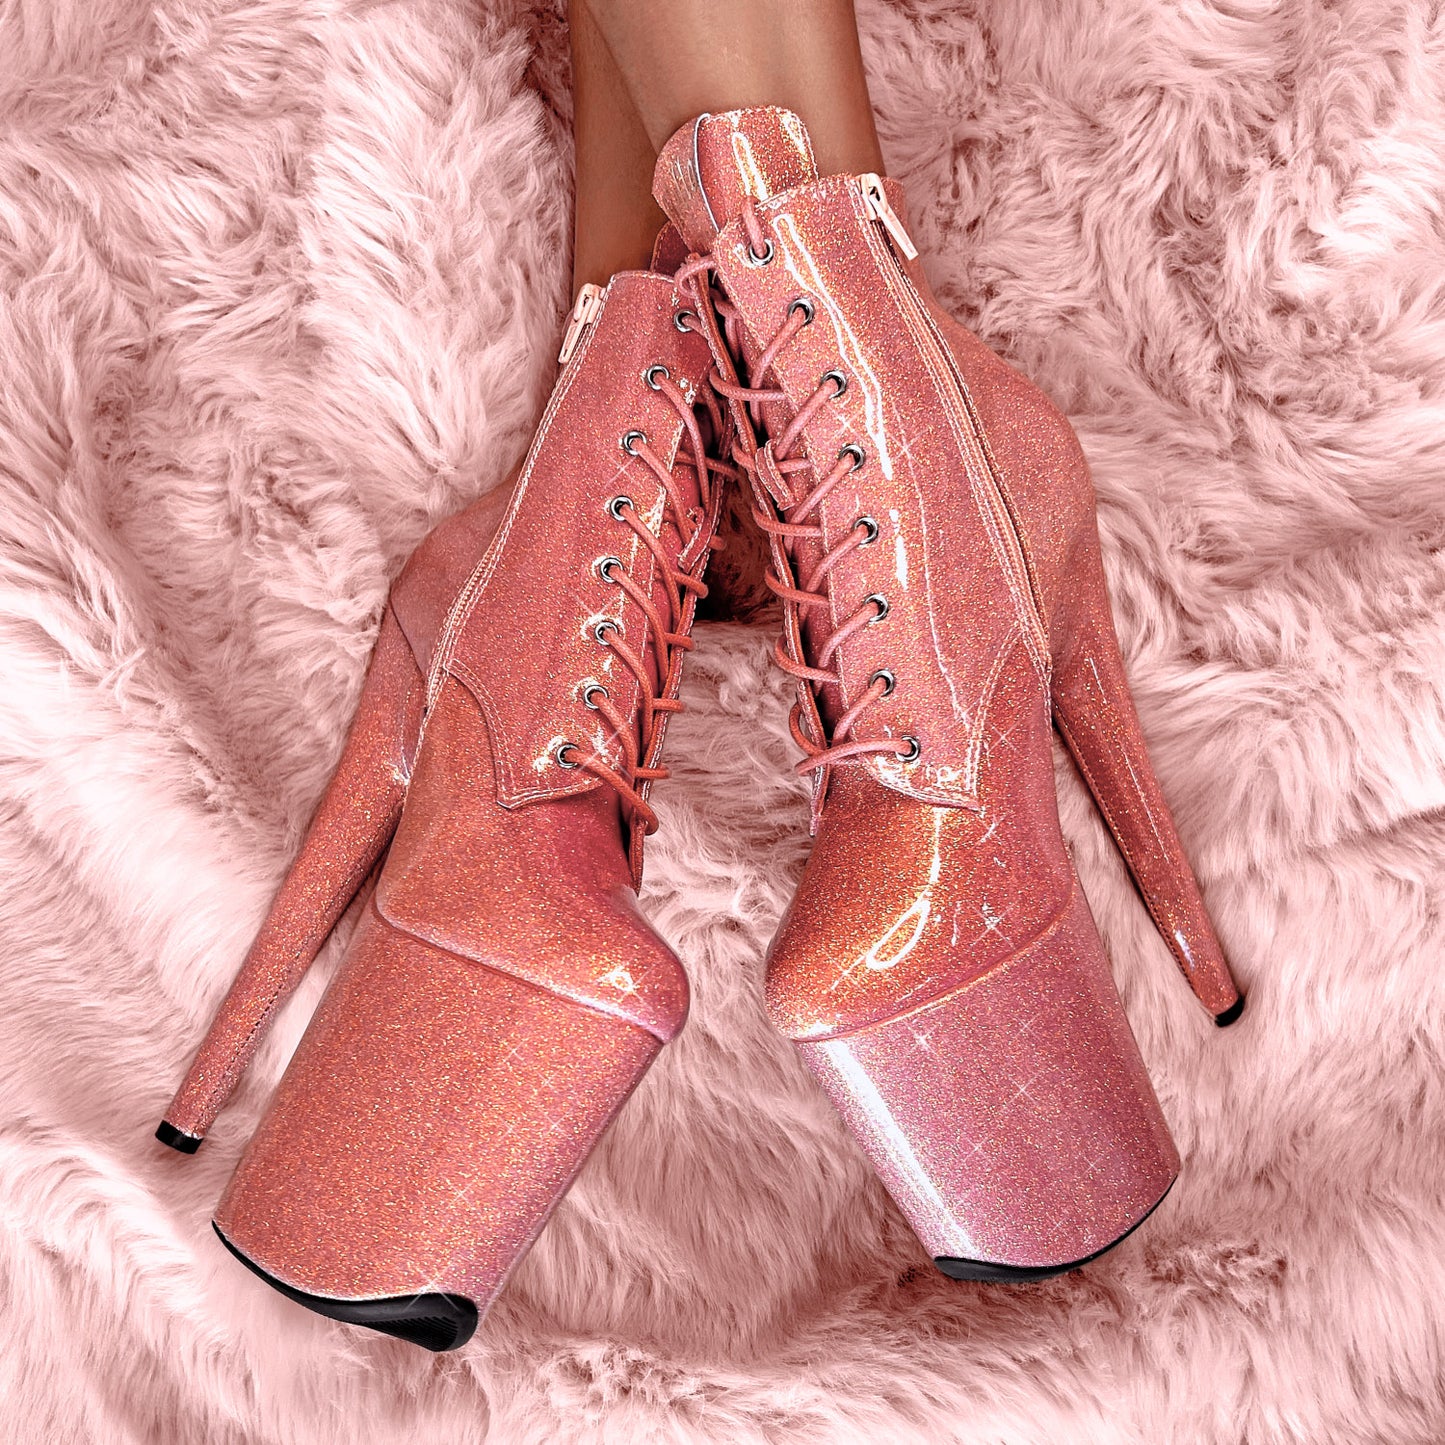 The Glitterati Ankle Boot - Feelin' Peachy - 8 INCH